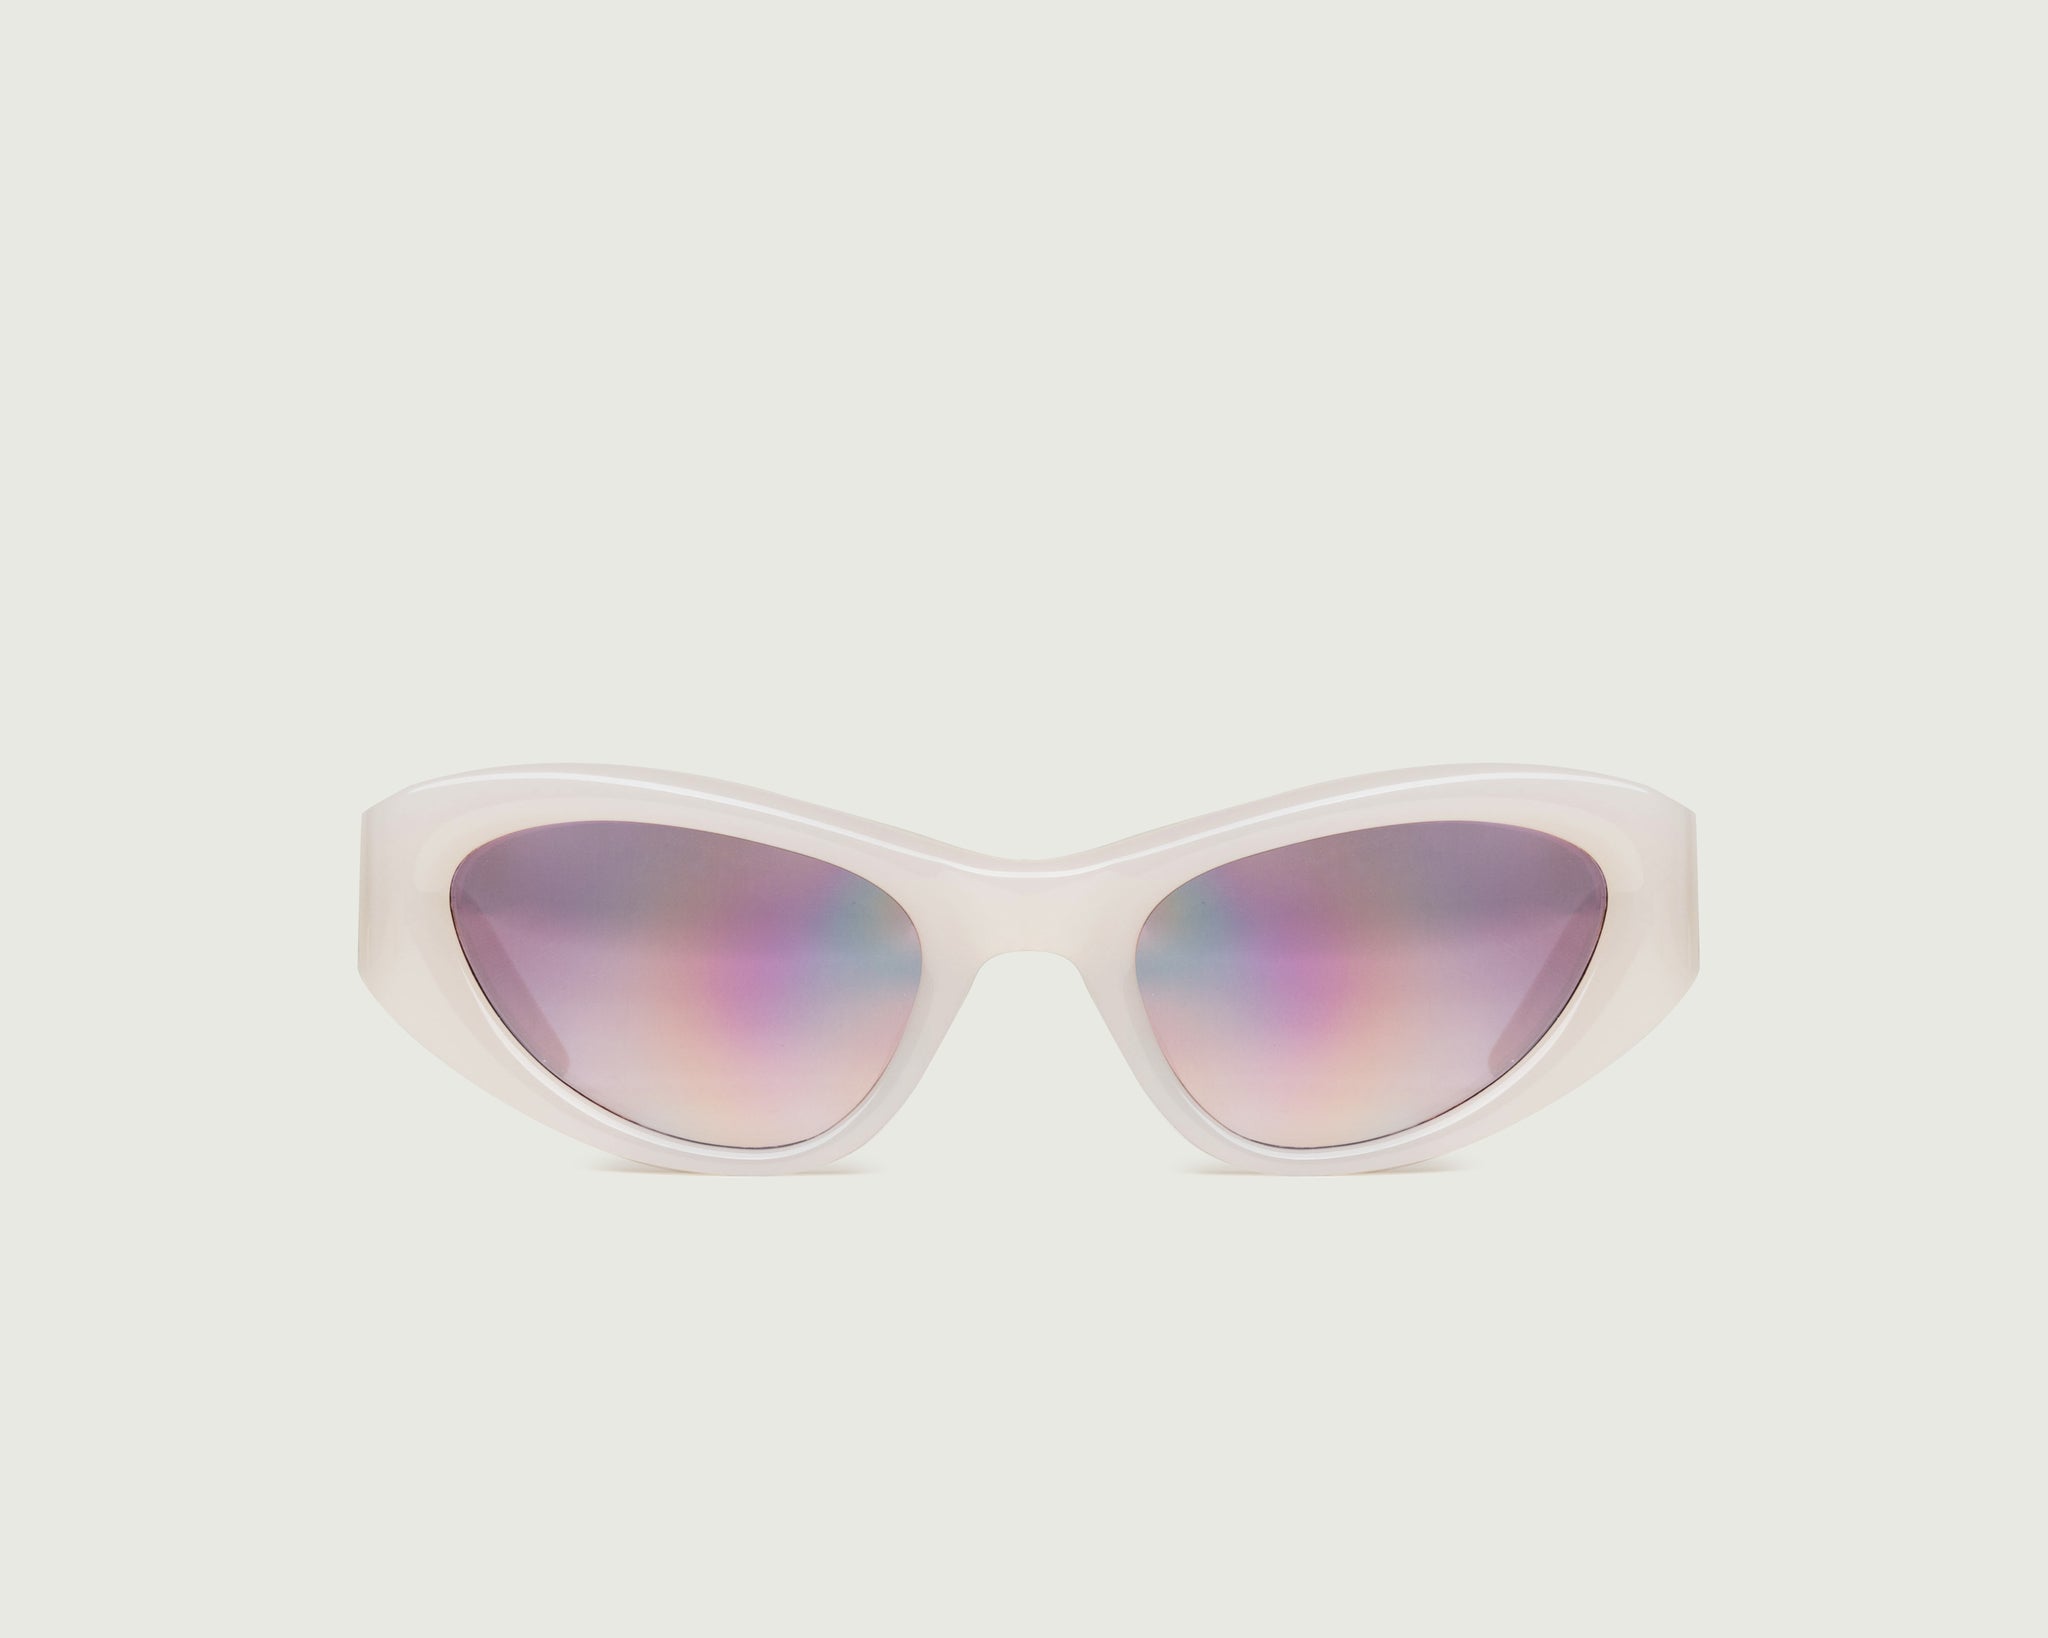 Sugar Plum ::Carly Sunglasses cateye white biodegradable acetate front